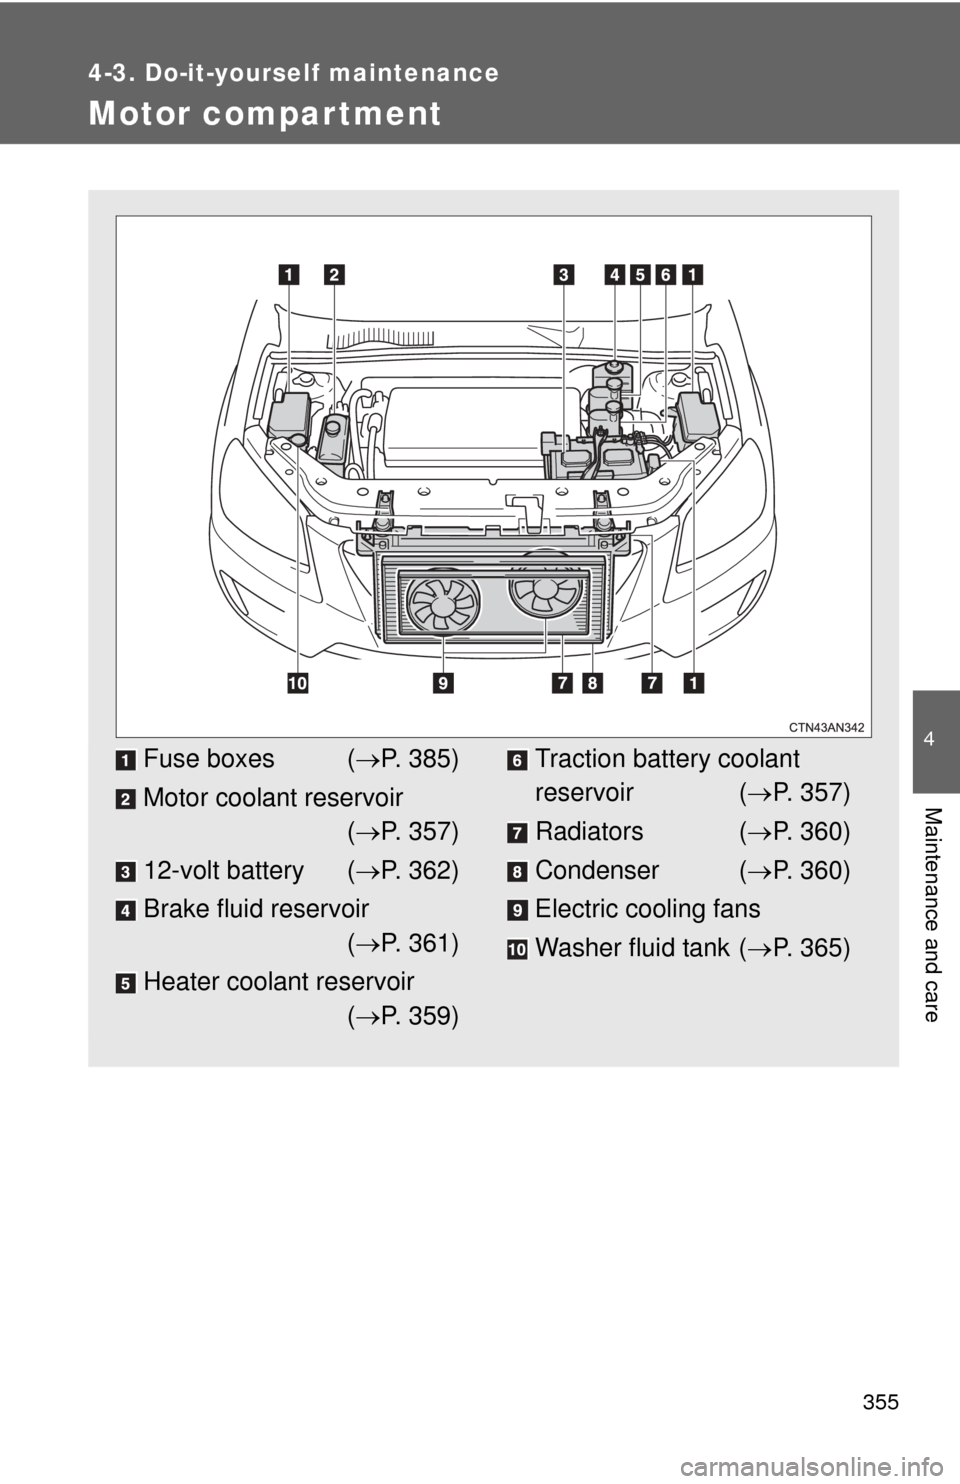 TOYOTA RAV4 EV 2014 1.G Owners Manual 355
4-3. Do-it-yourself maintenance
4
Maintenance and care
Motor compartment
Fuse boxes (P. 385)
Motor coolant reservoir ( P. 357)
12-volt battery ( P. 362)
Brake fluid reservoir ( P. 361)